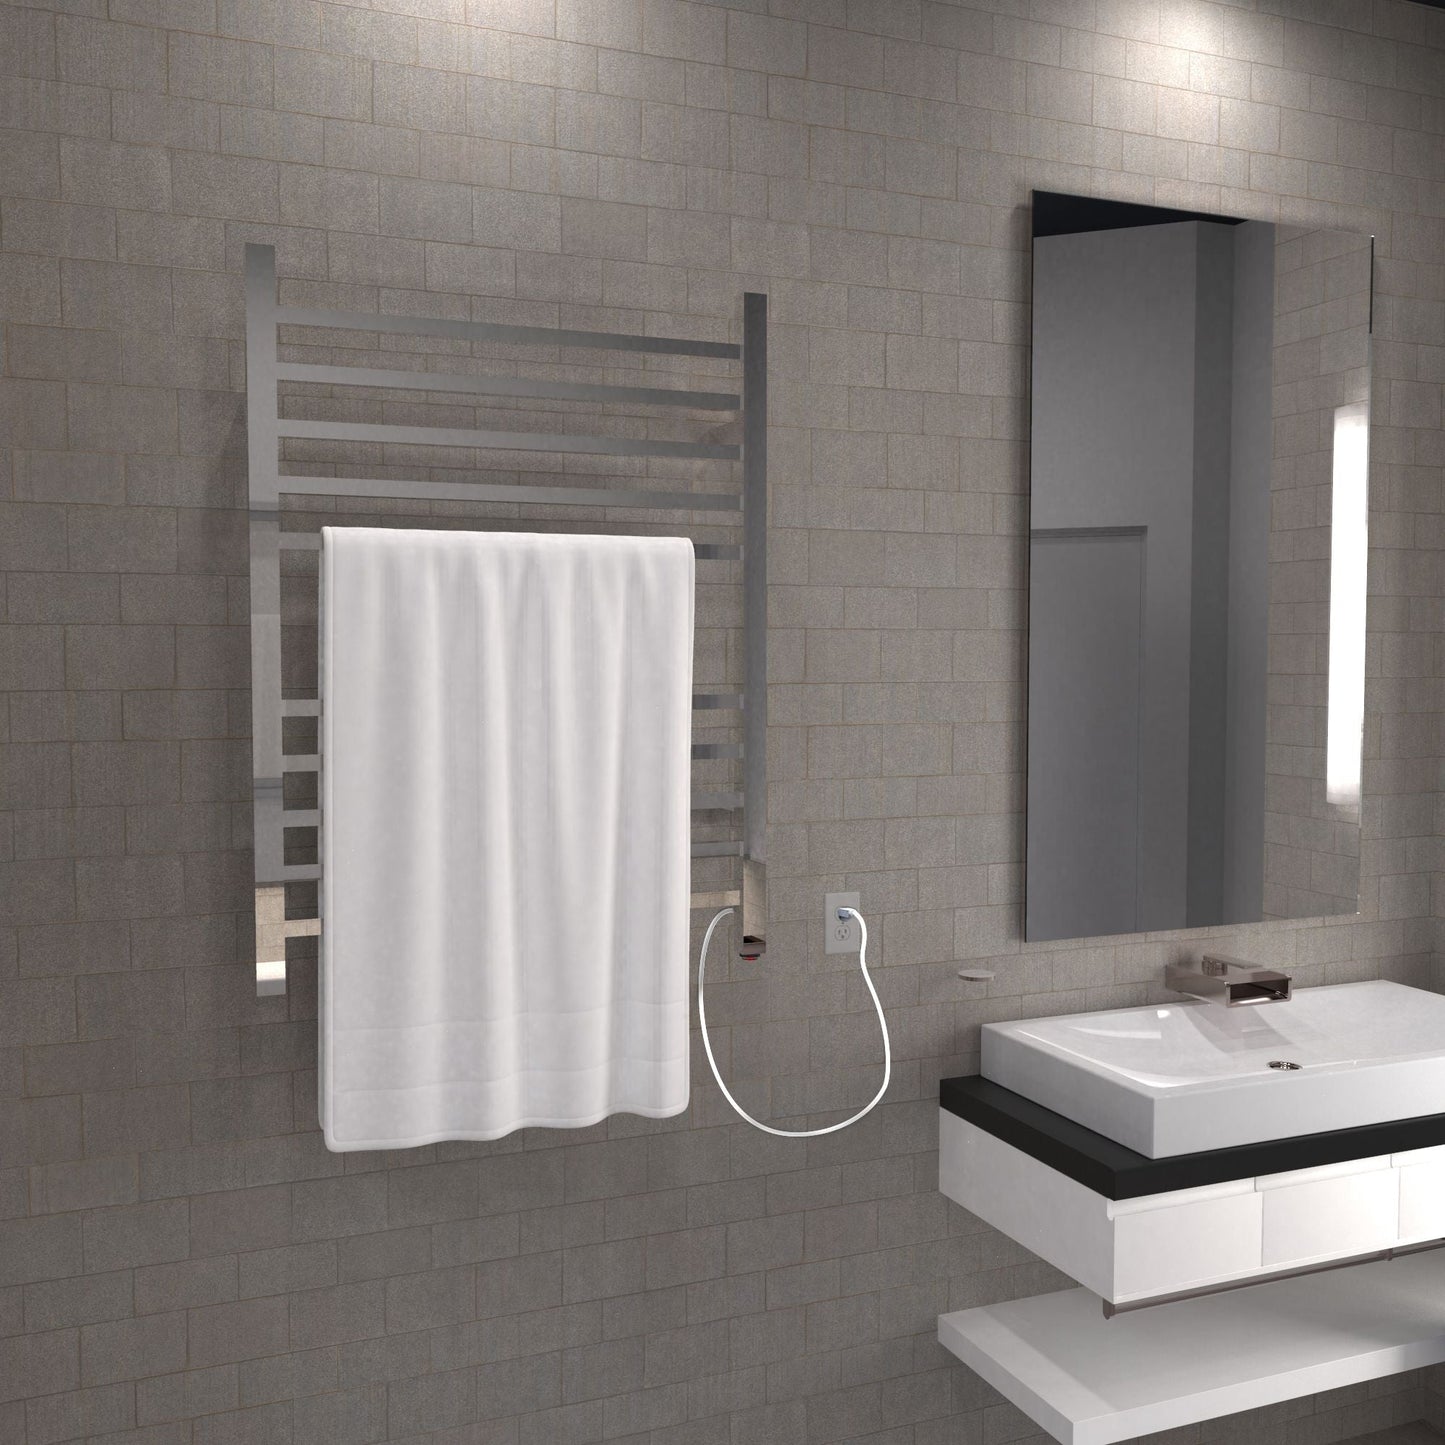 Amba Radiant Square Plug-In 10 Bar Electric Towel Warmer - 24"w x 32"h